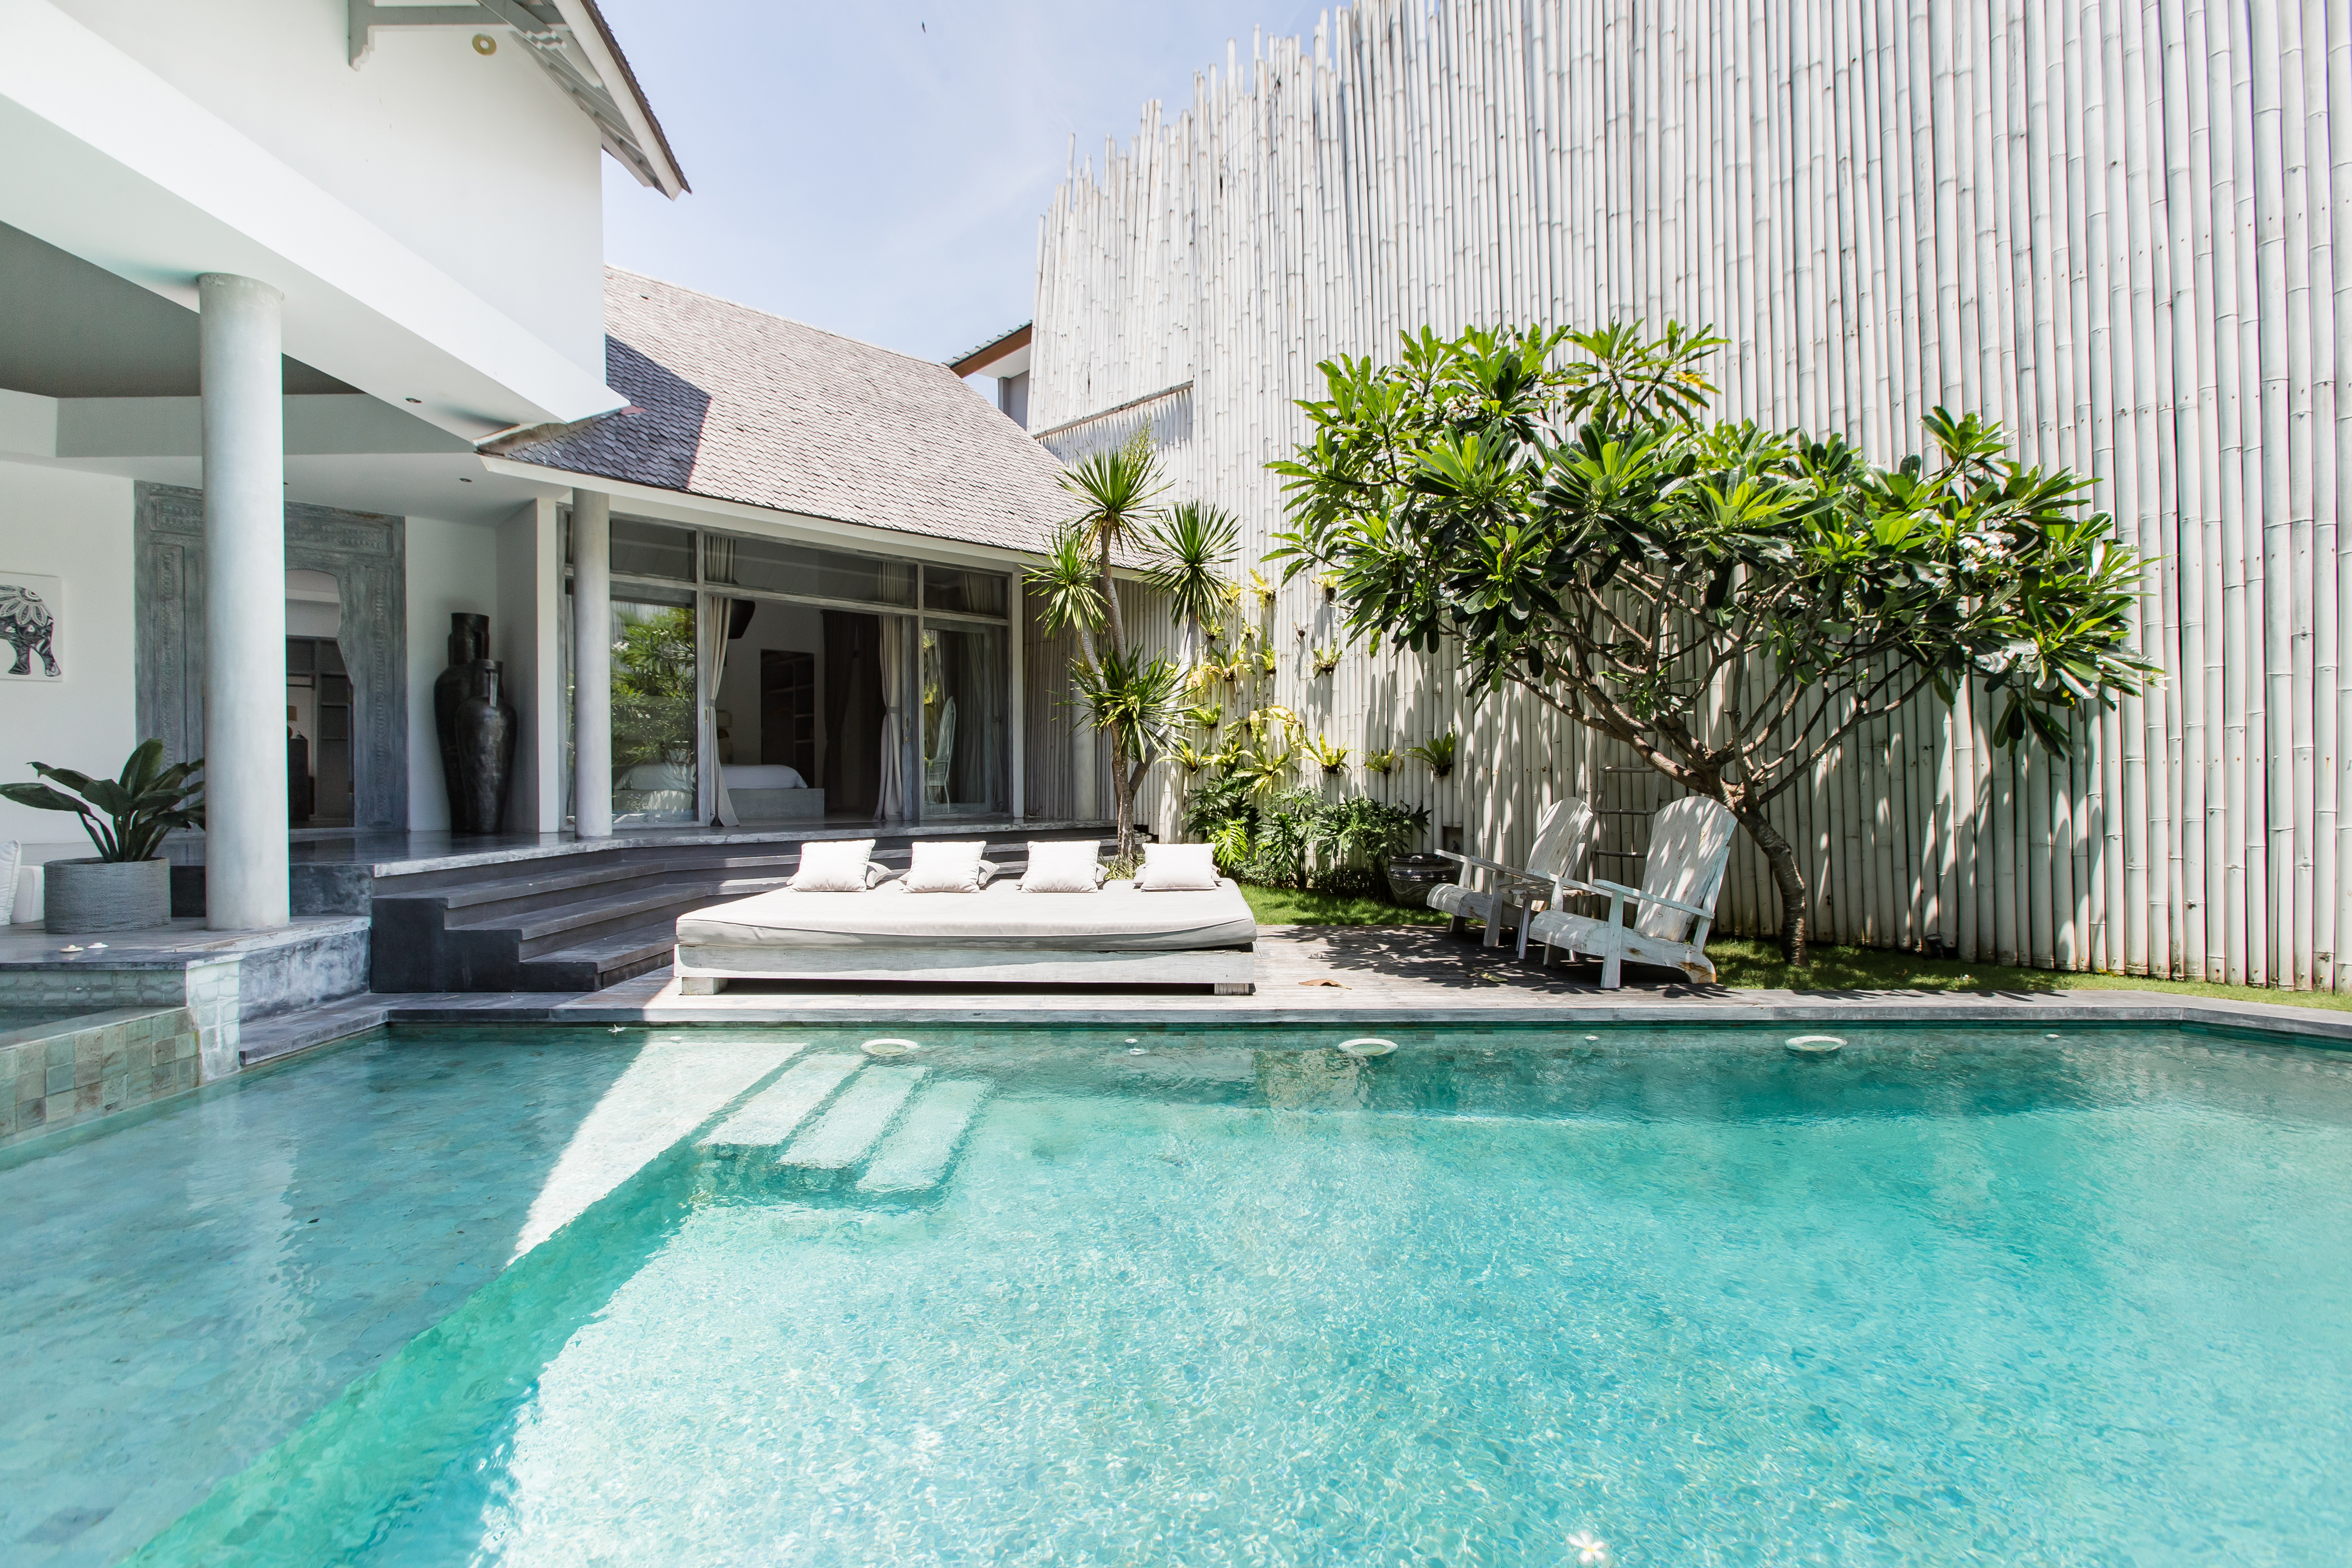 Stunning Villa Next to Canggu - Villas for Rent in Kuta Utara, Bali,  Indonesia - Airbnb